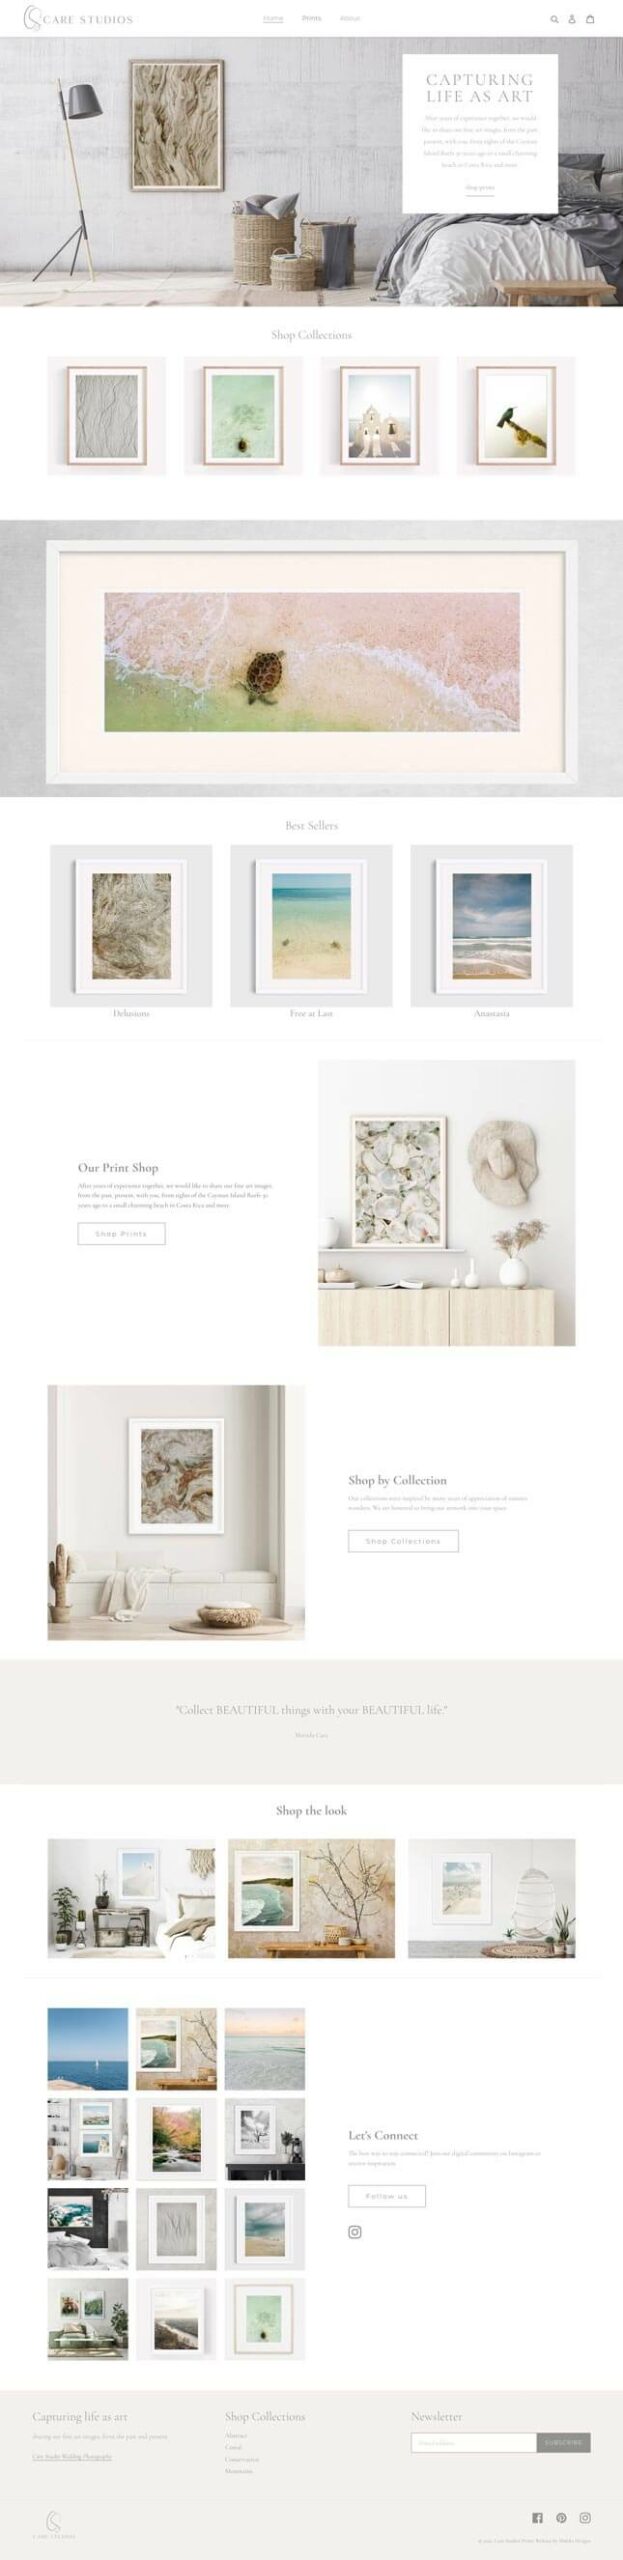 Care Studio Prints - Shopify Website